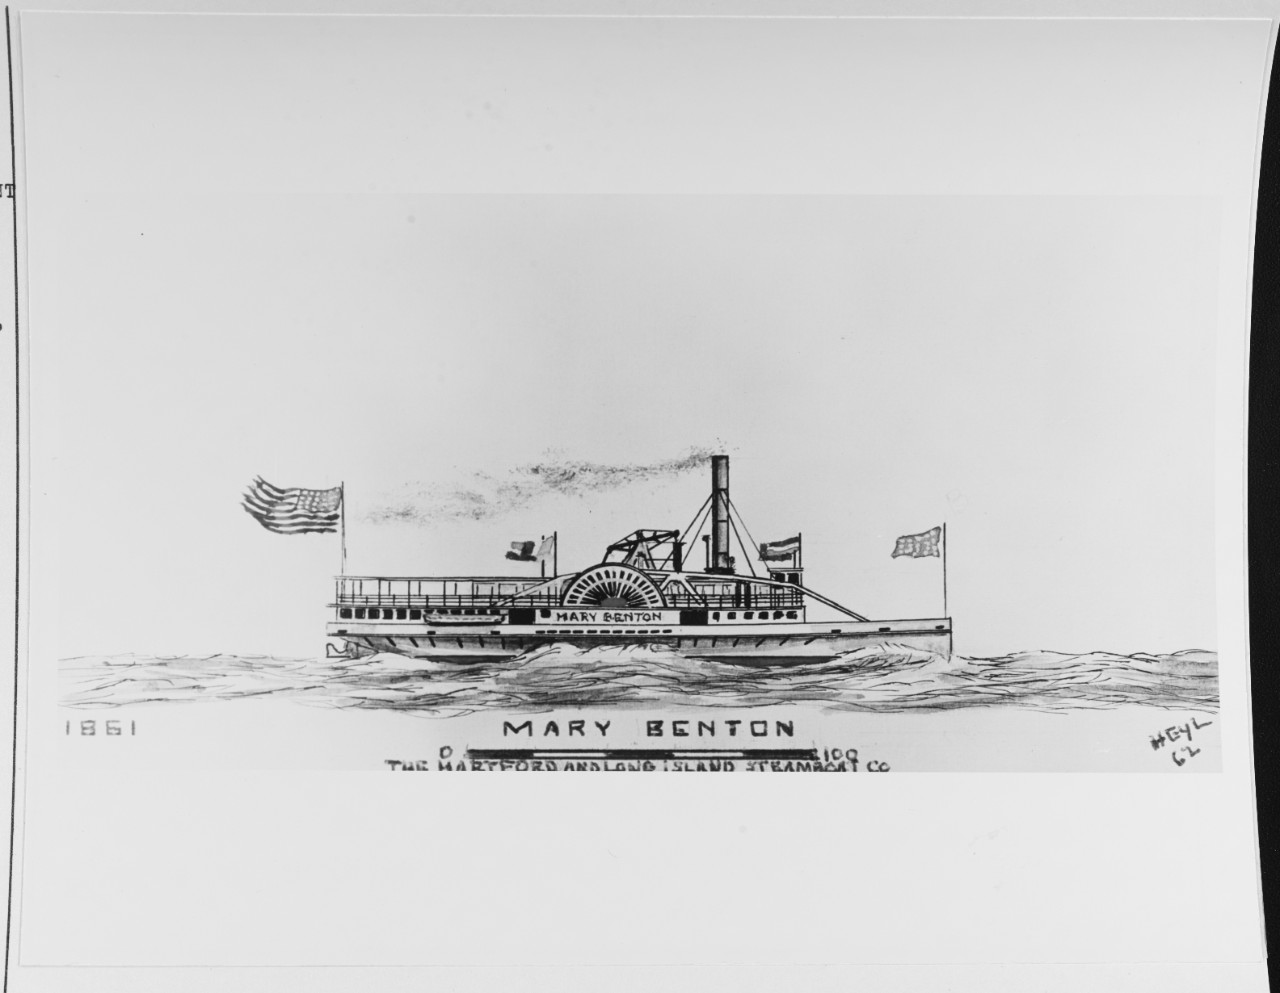 MARY BENTON (American merchant steamer, 1860-1903)